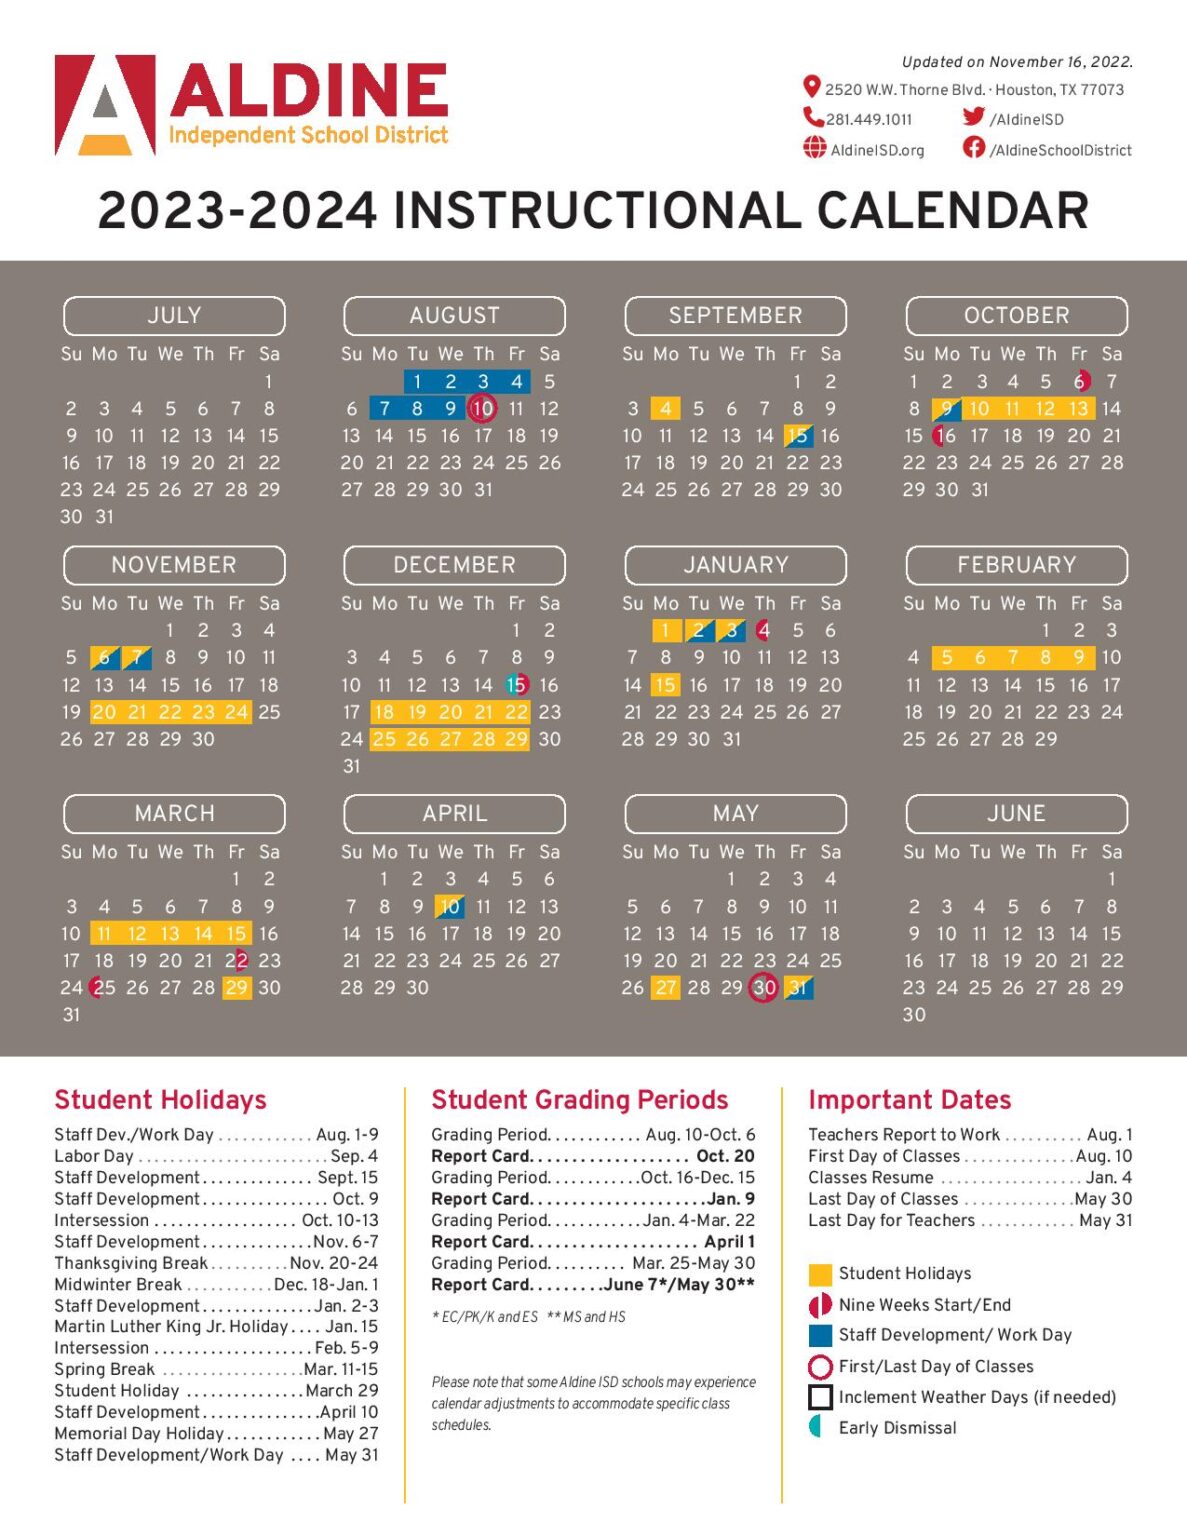 Aldine Independent School District Calendar 1187x1536 